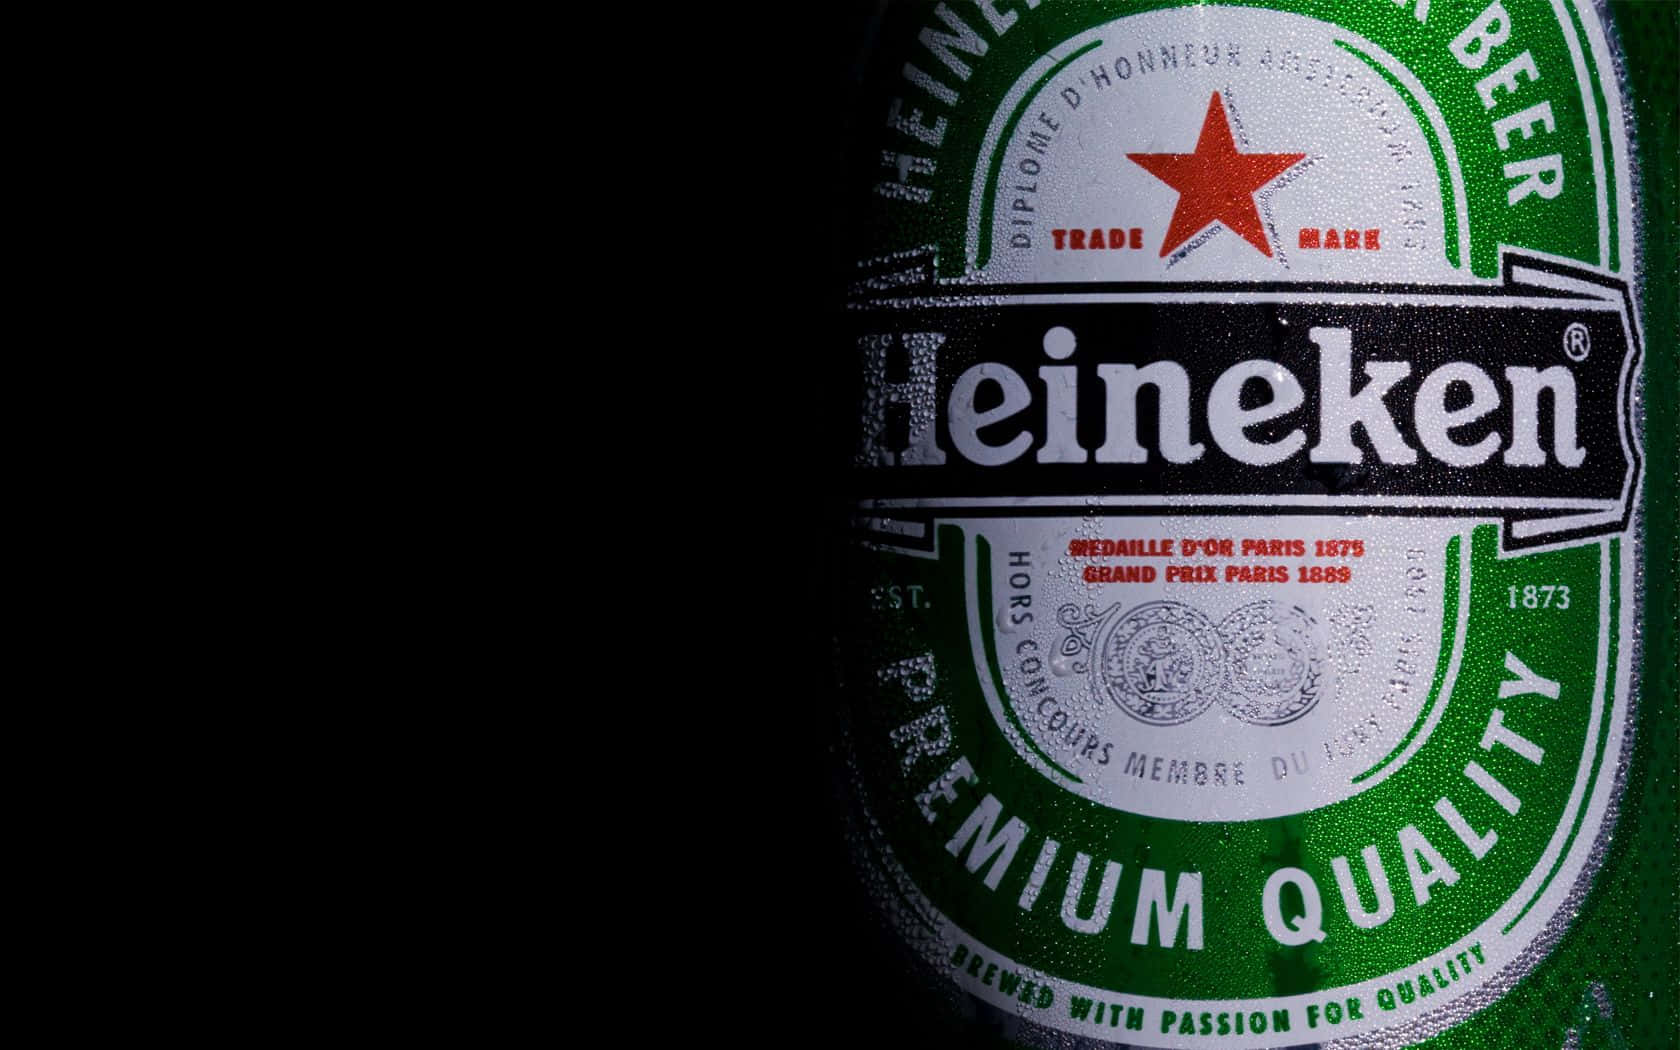 Heineken Beer with overflowing foam